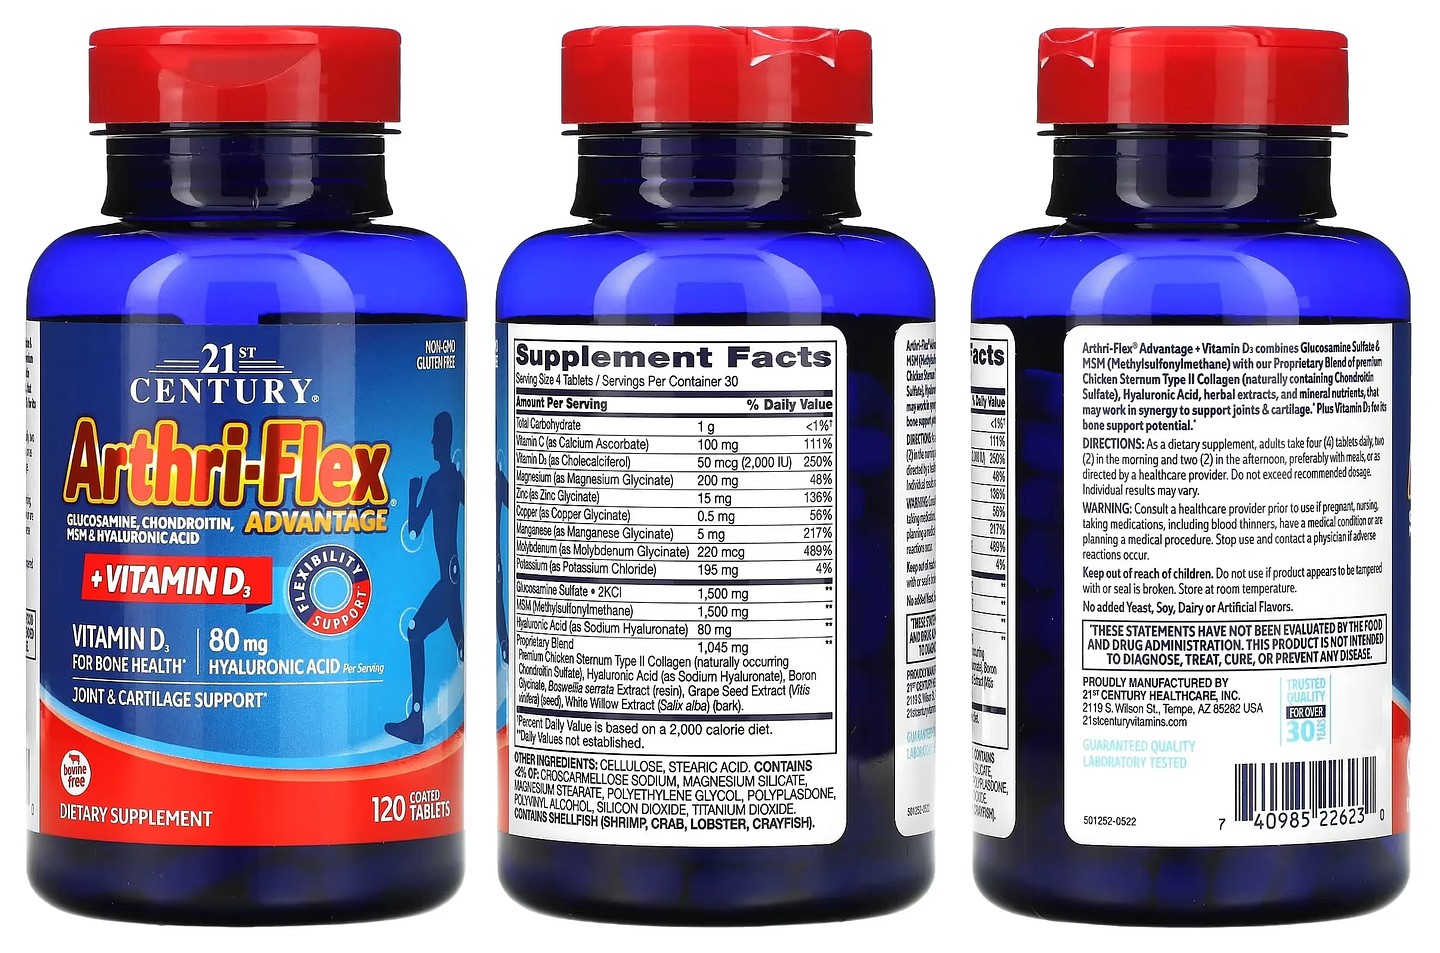 21st Century, Arthri-Flex Advantage + Vitamin D3 packaging